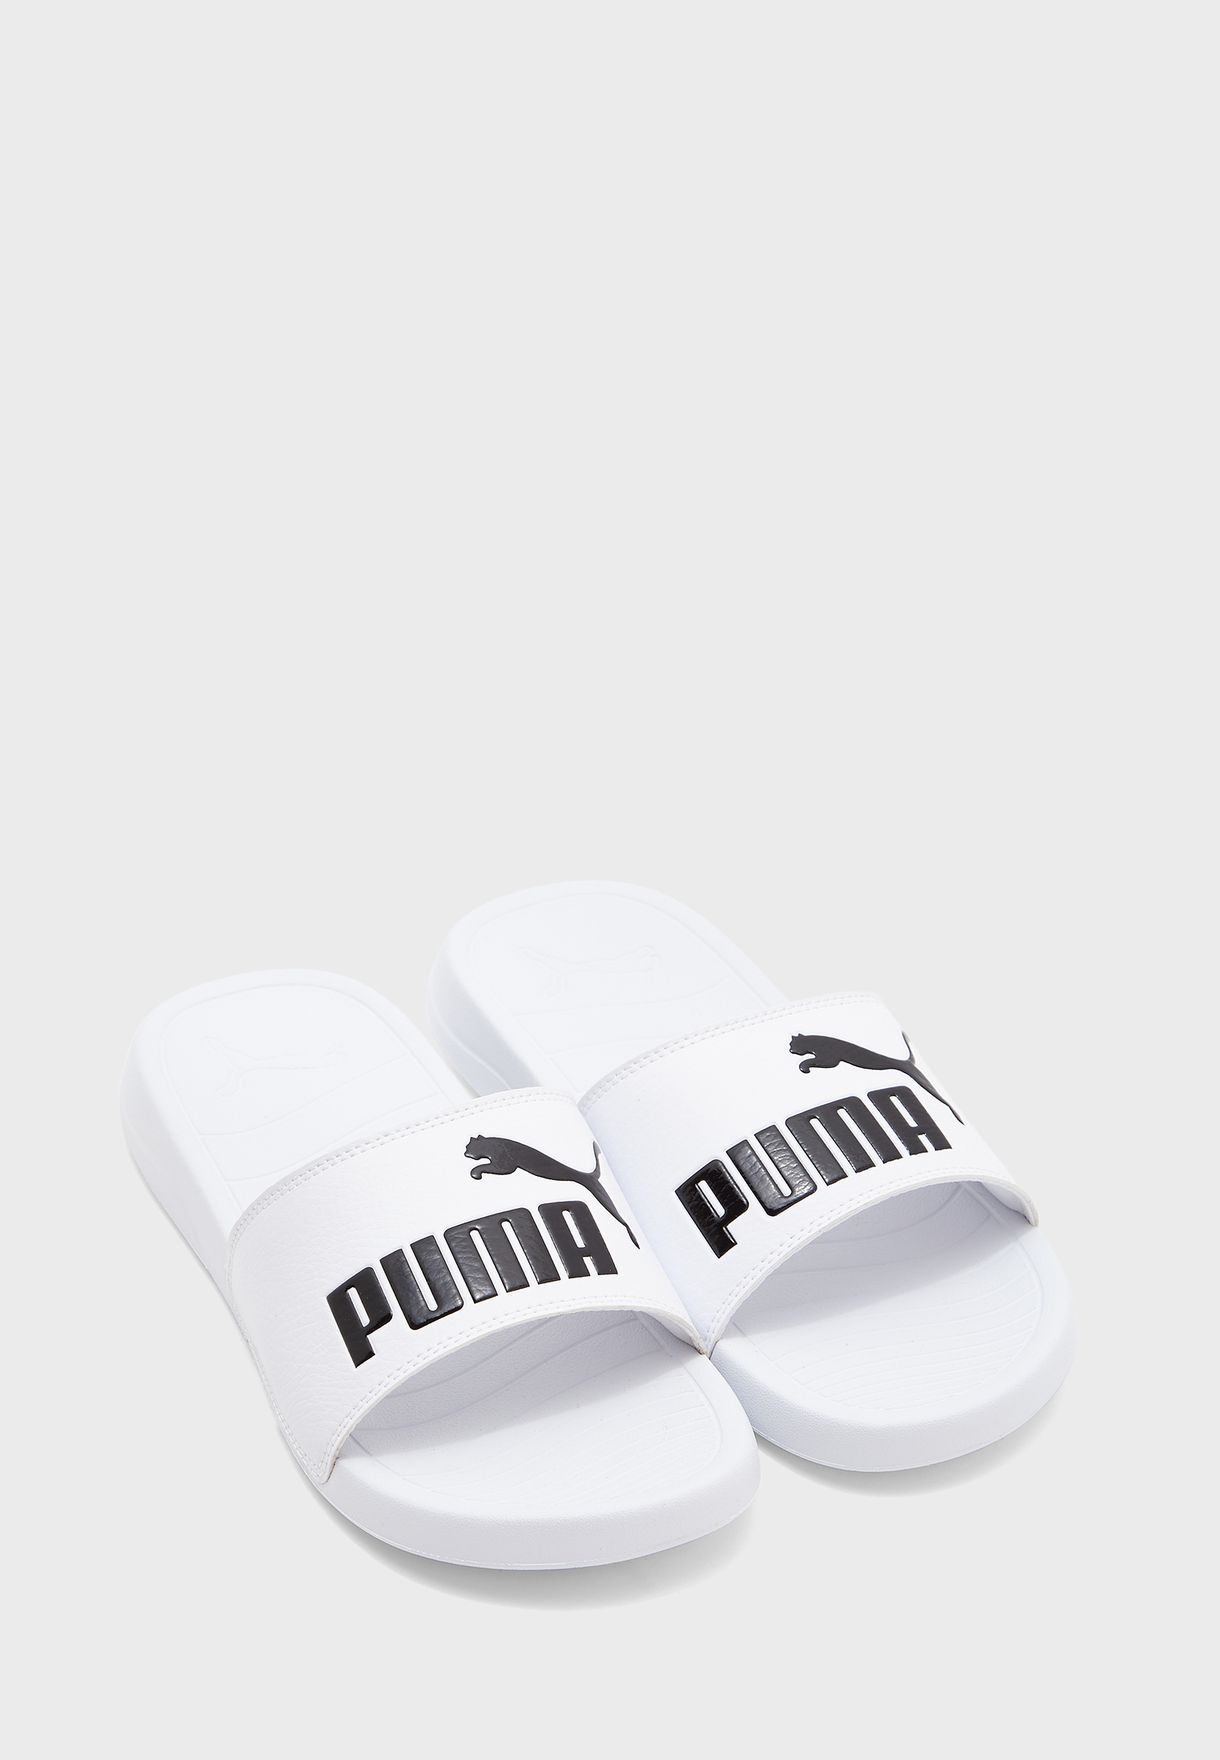 puma slippers under 300